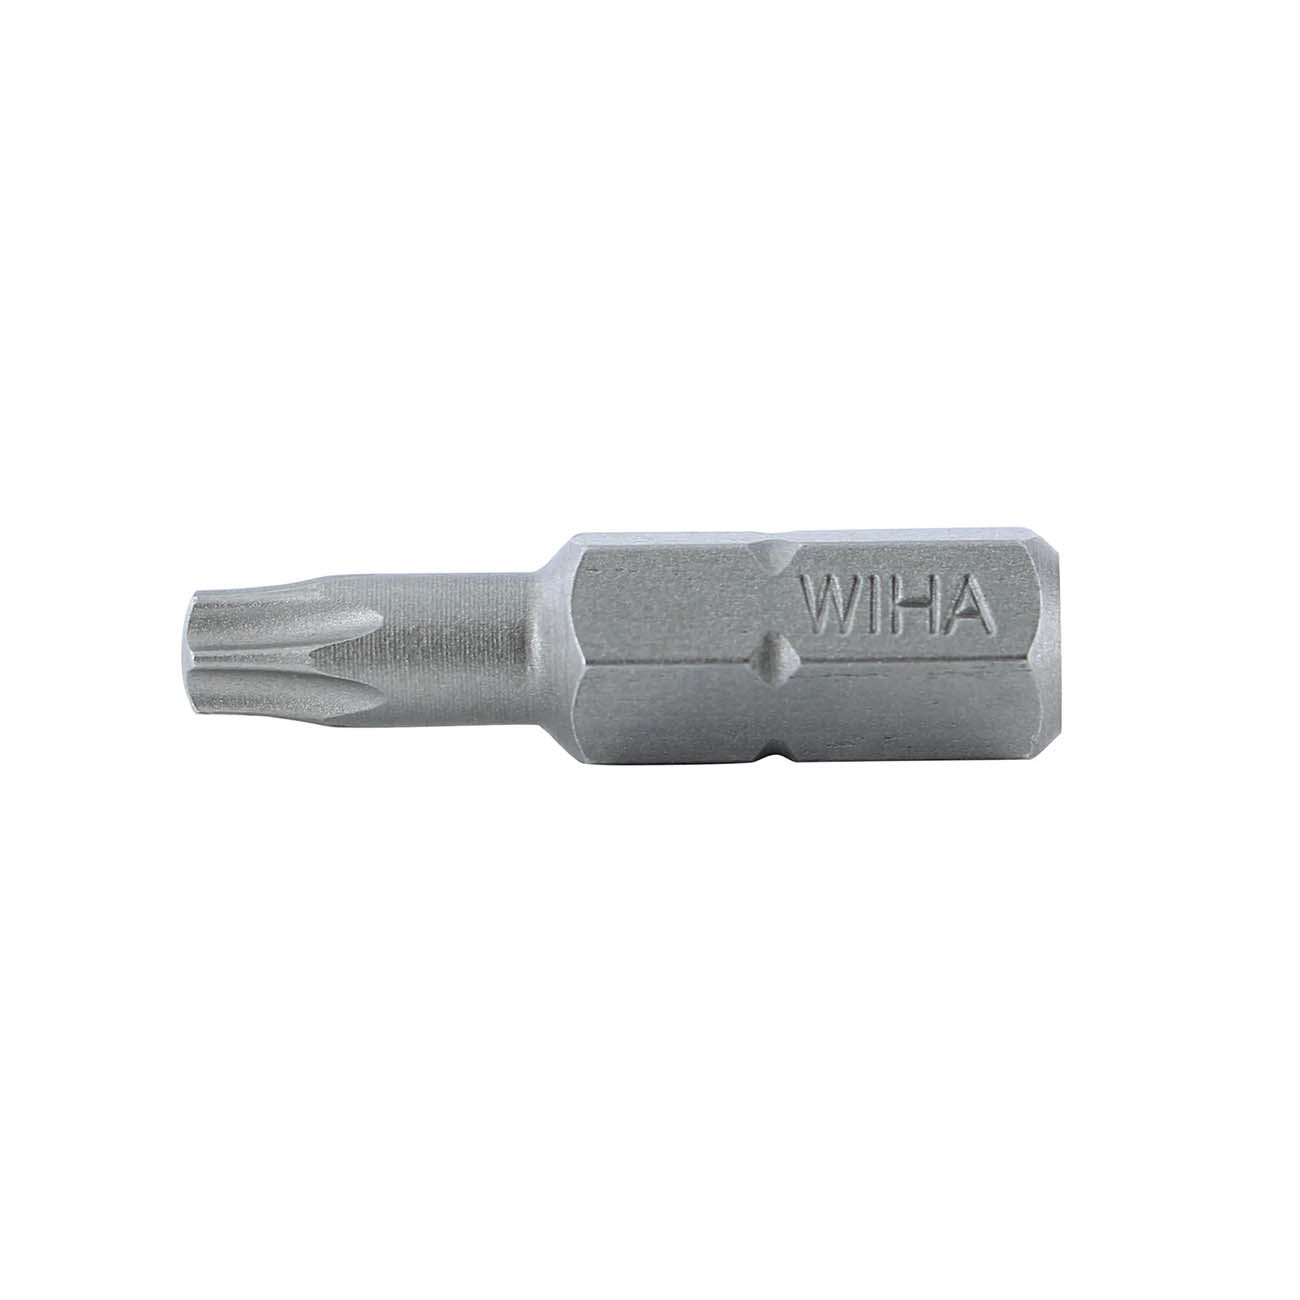 Wiha Torx Insert Bit T20 X 25mm - Contractor 30 Pack